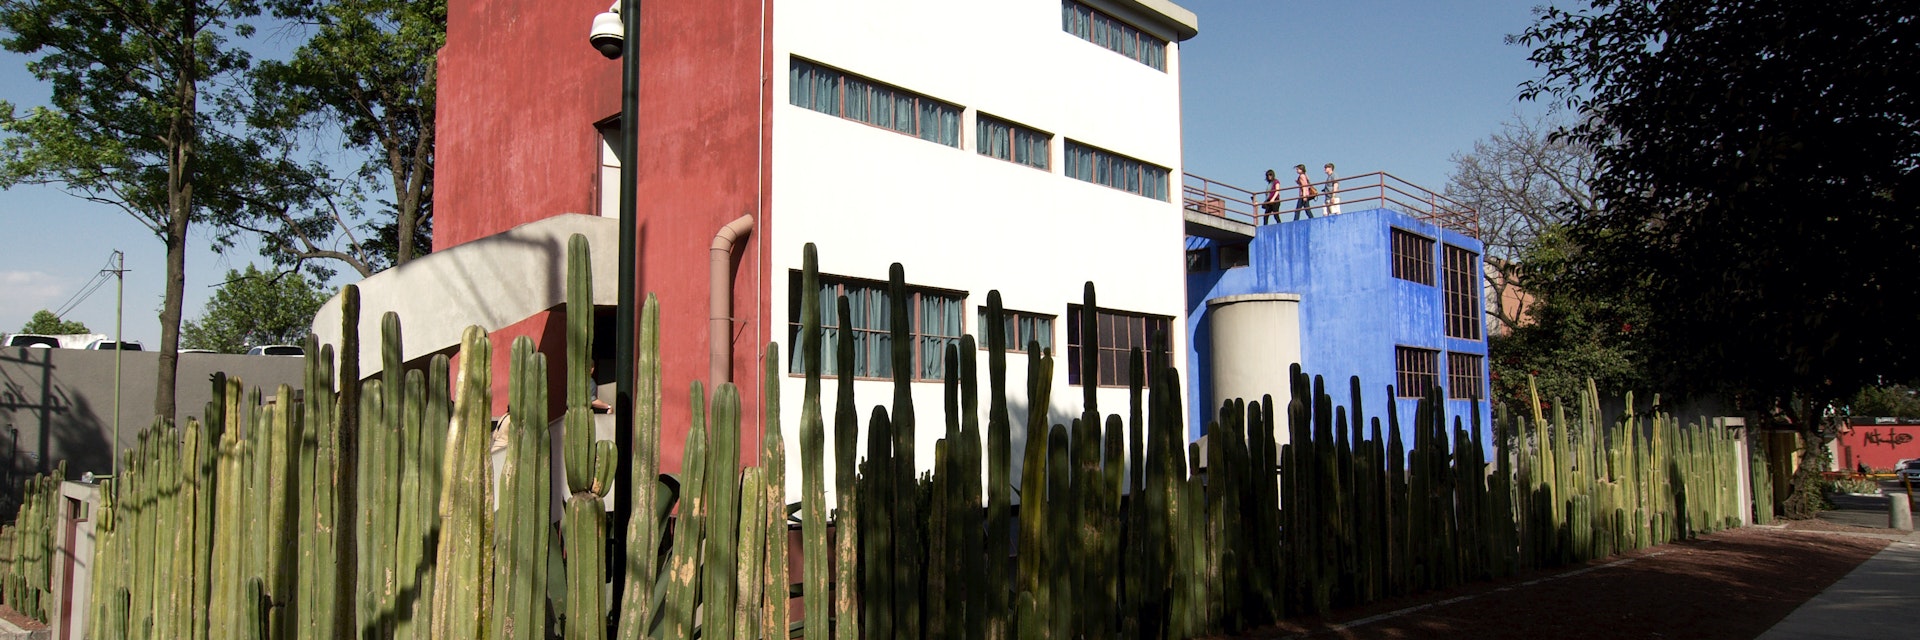 House Studio Museum of Diego Rivera and Frida Kahlo.